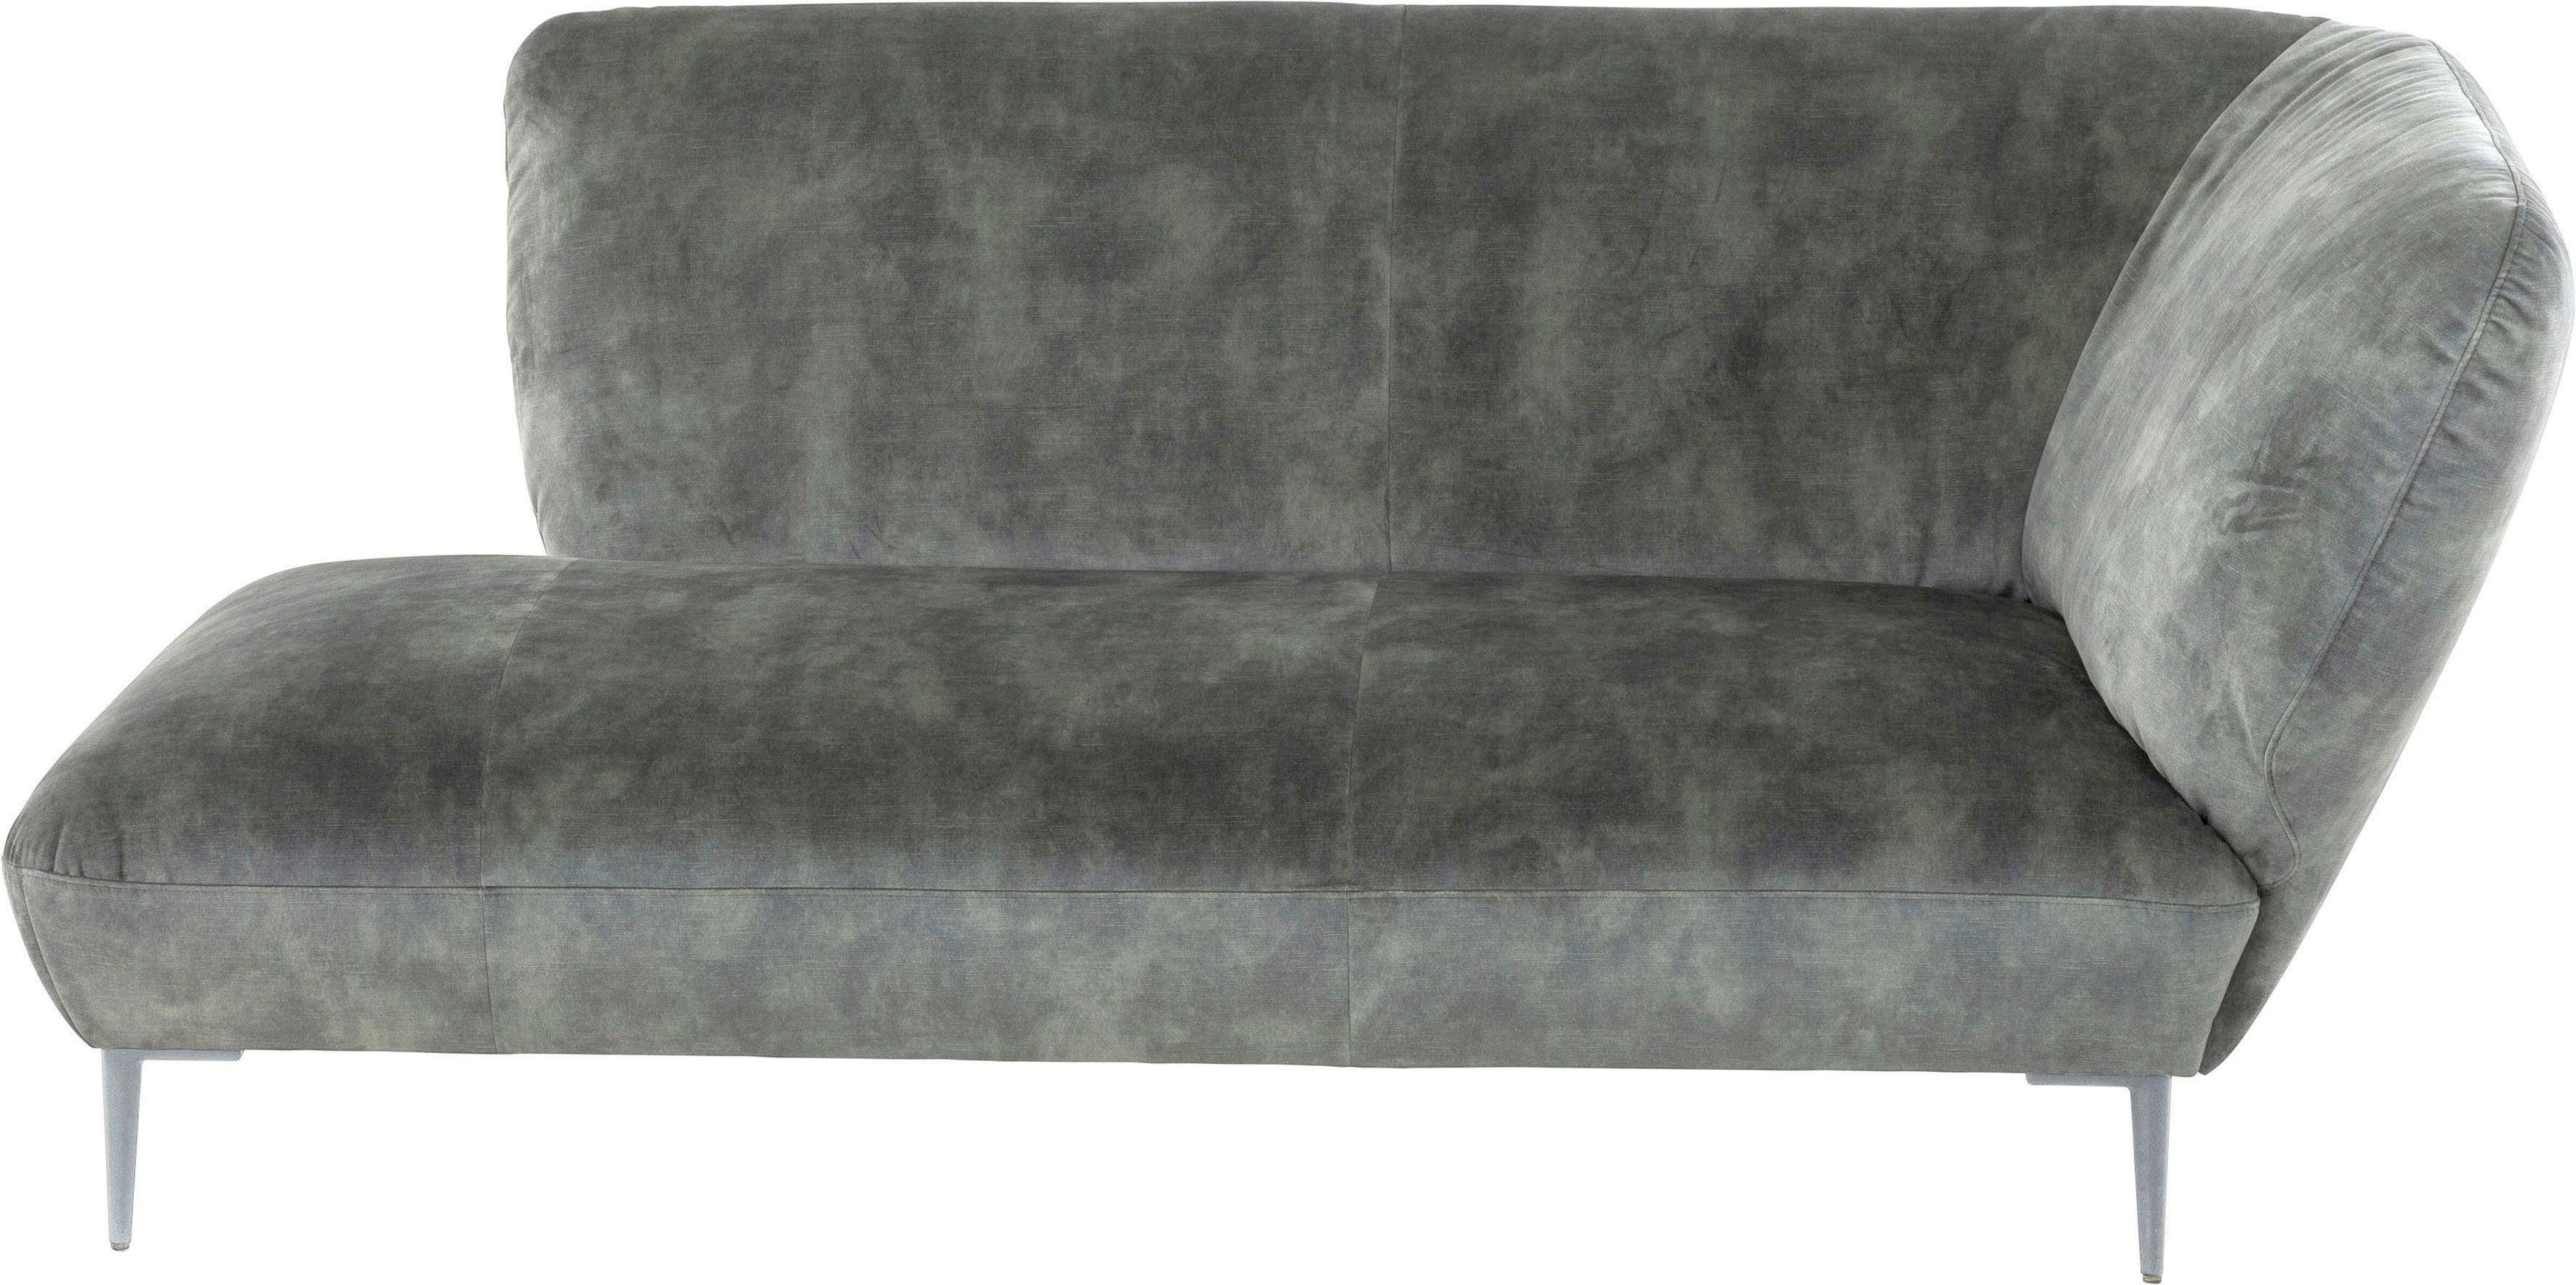 S41 W.SCHILLIG Silber ELLA, Boch & steel Chaiselongue matt Füße Villeroy